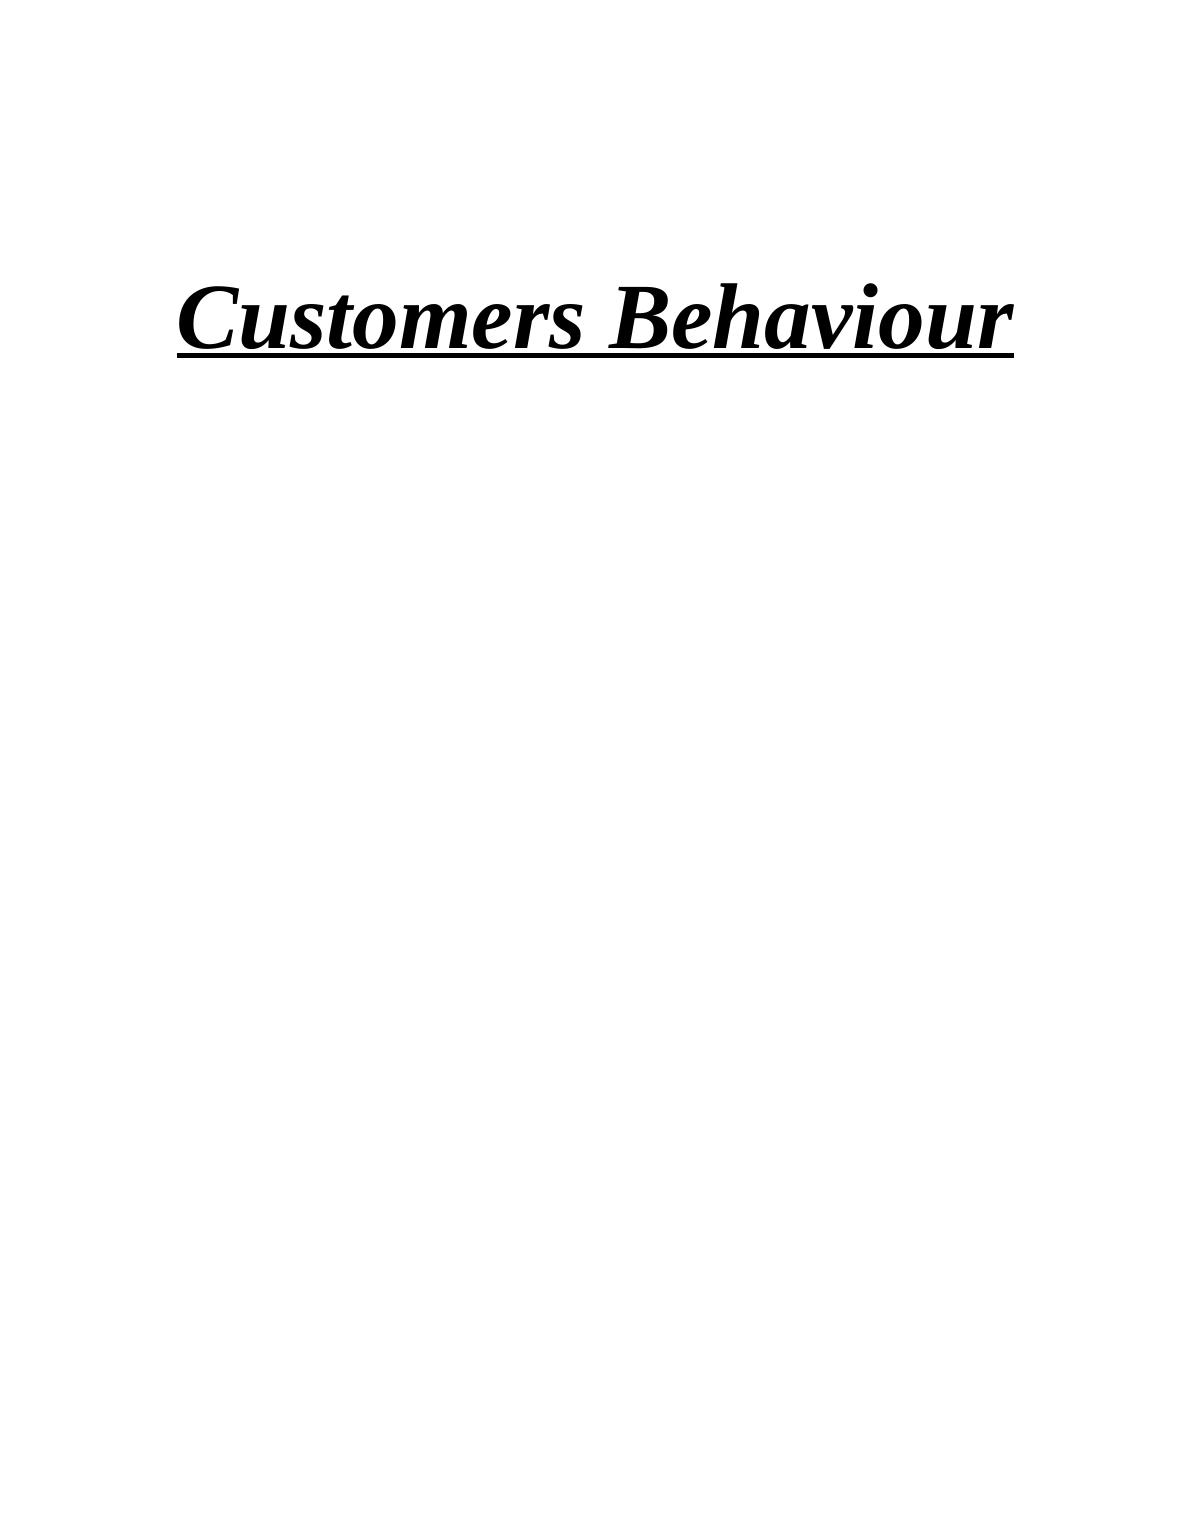 Customers Behaviour - Coca Cola_1